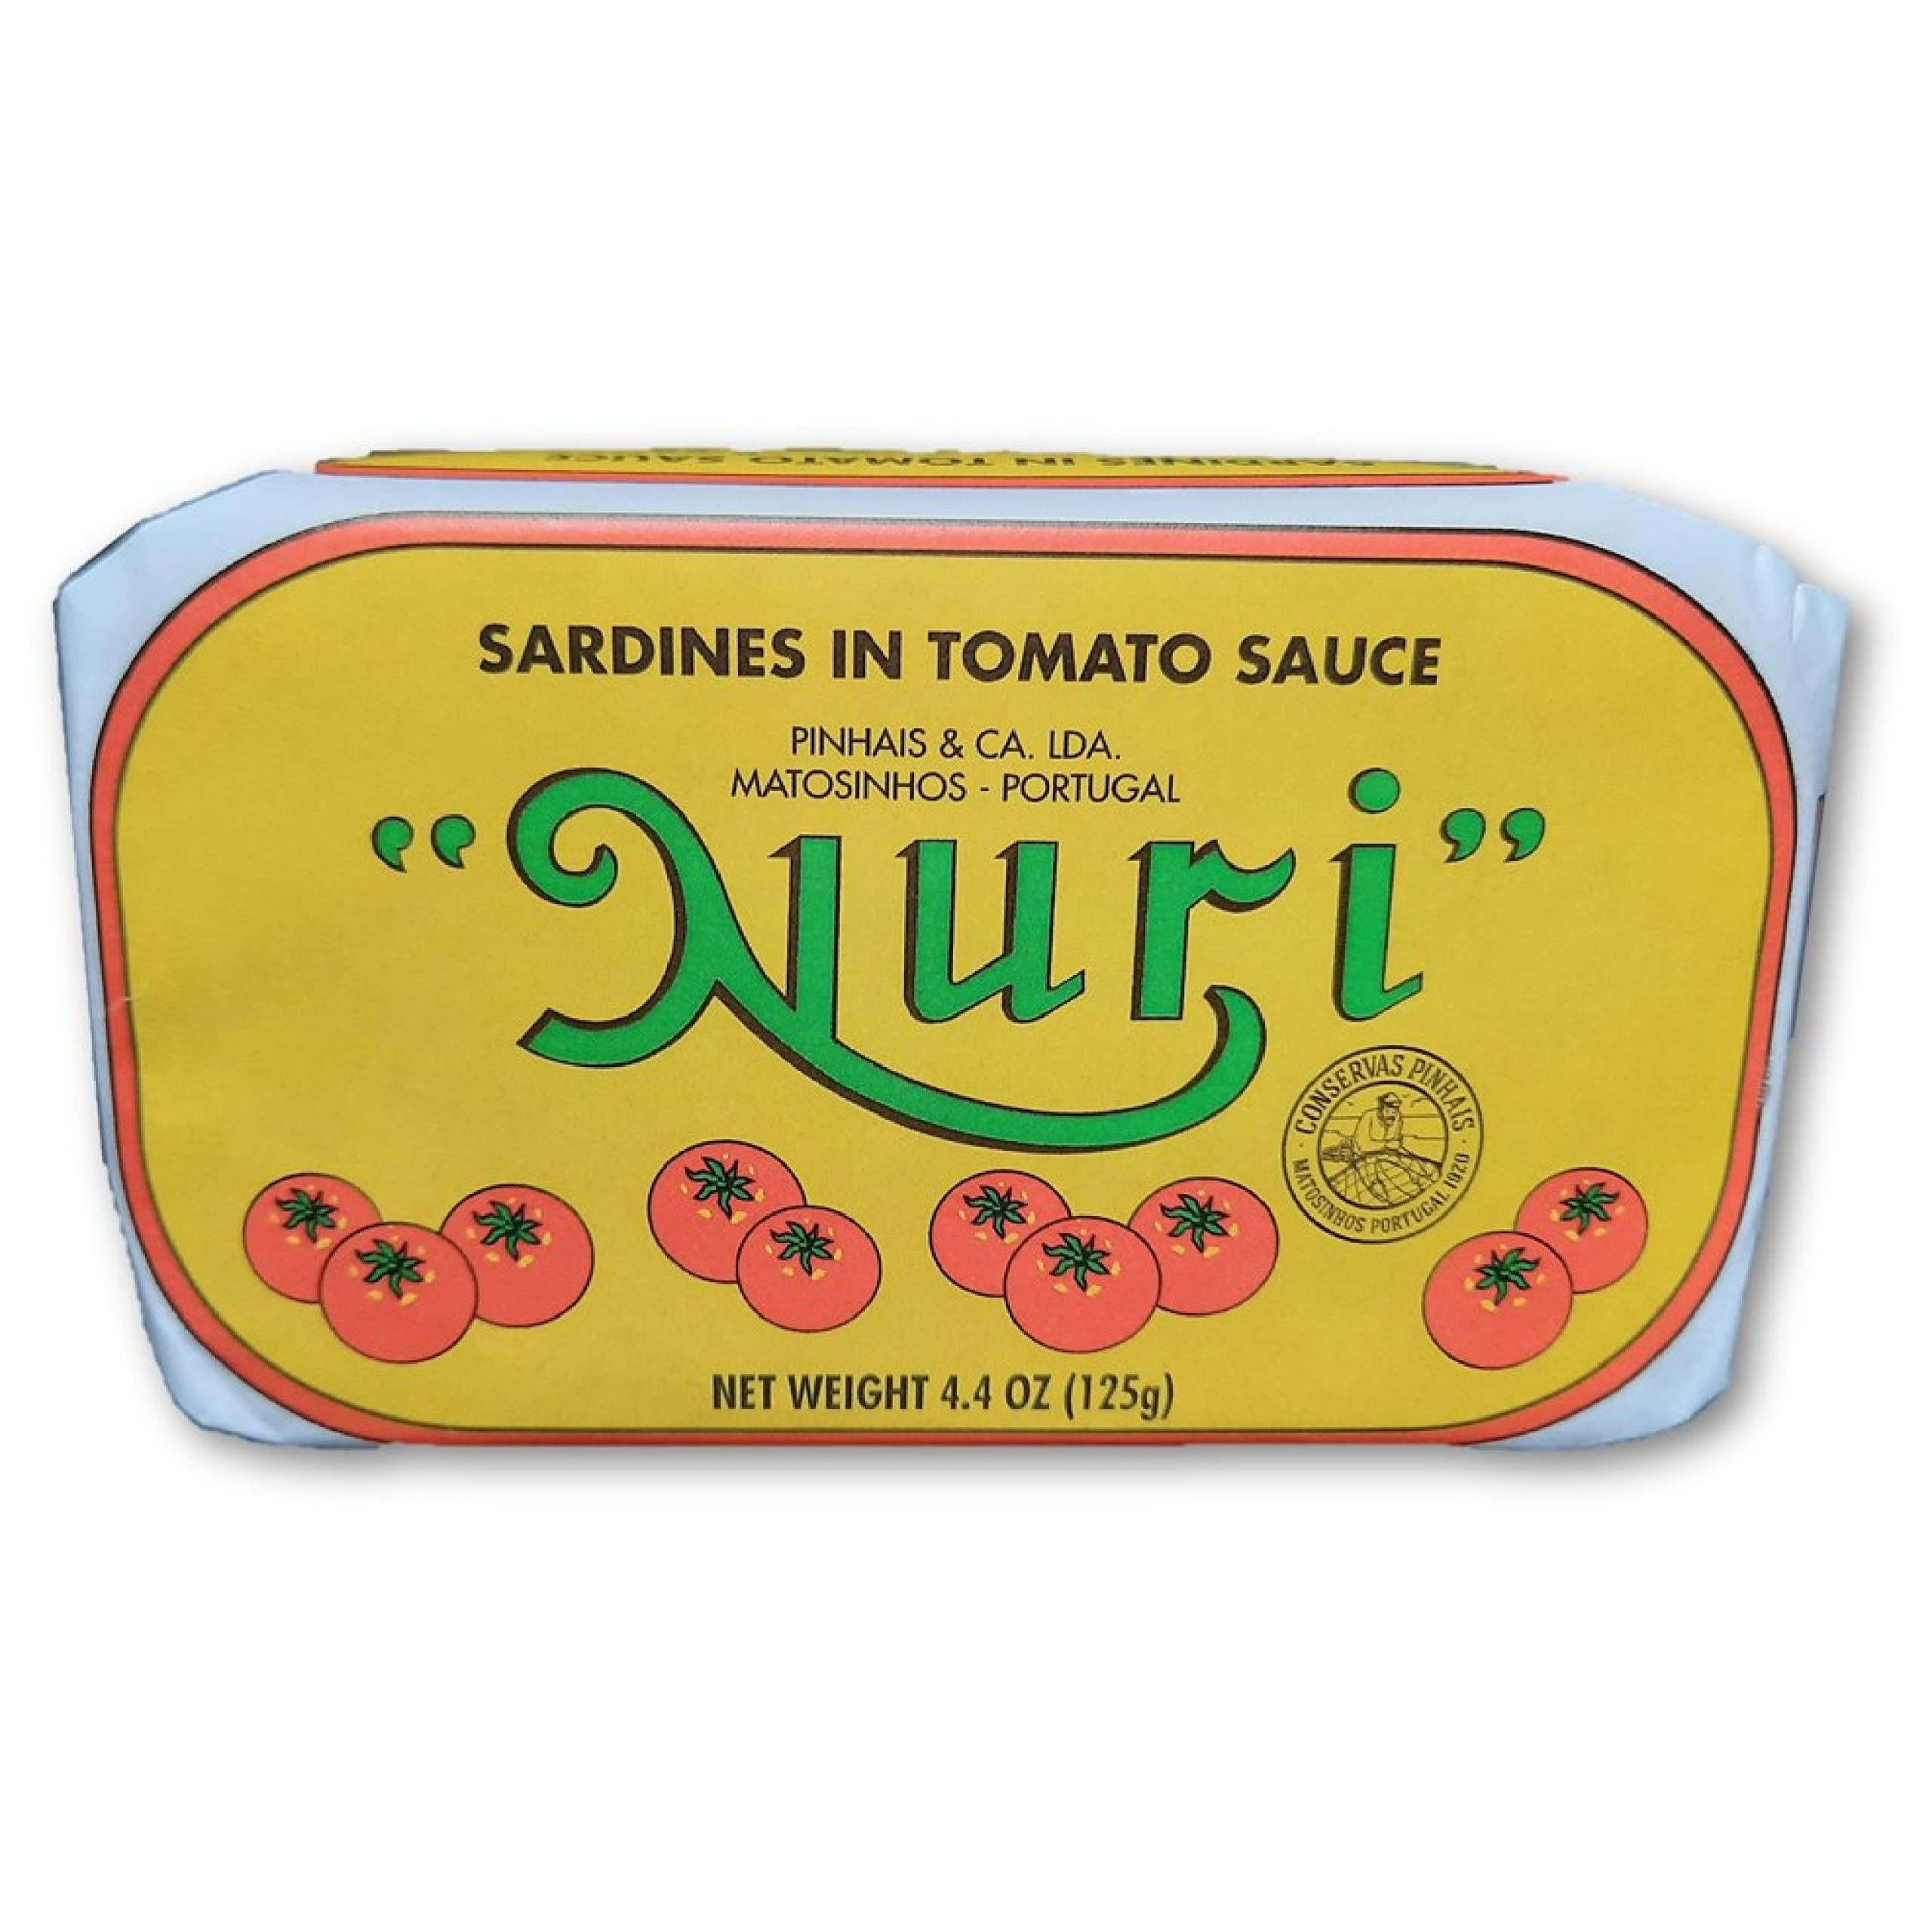 NURI Portuguese Sardines in Tomato Sauce - 4 Pack - (4.4 oz cans)